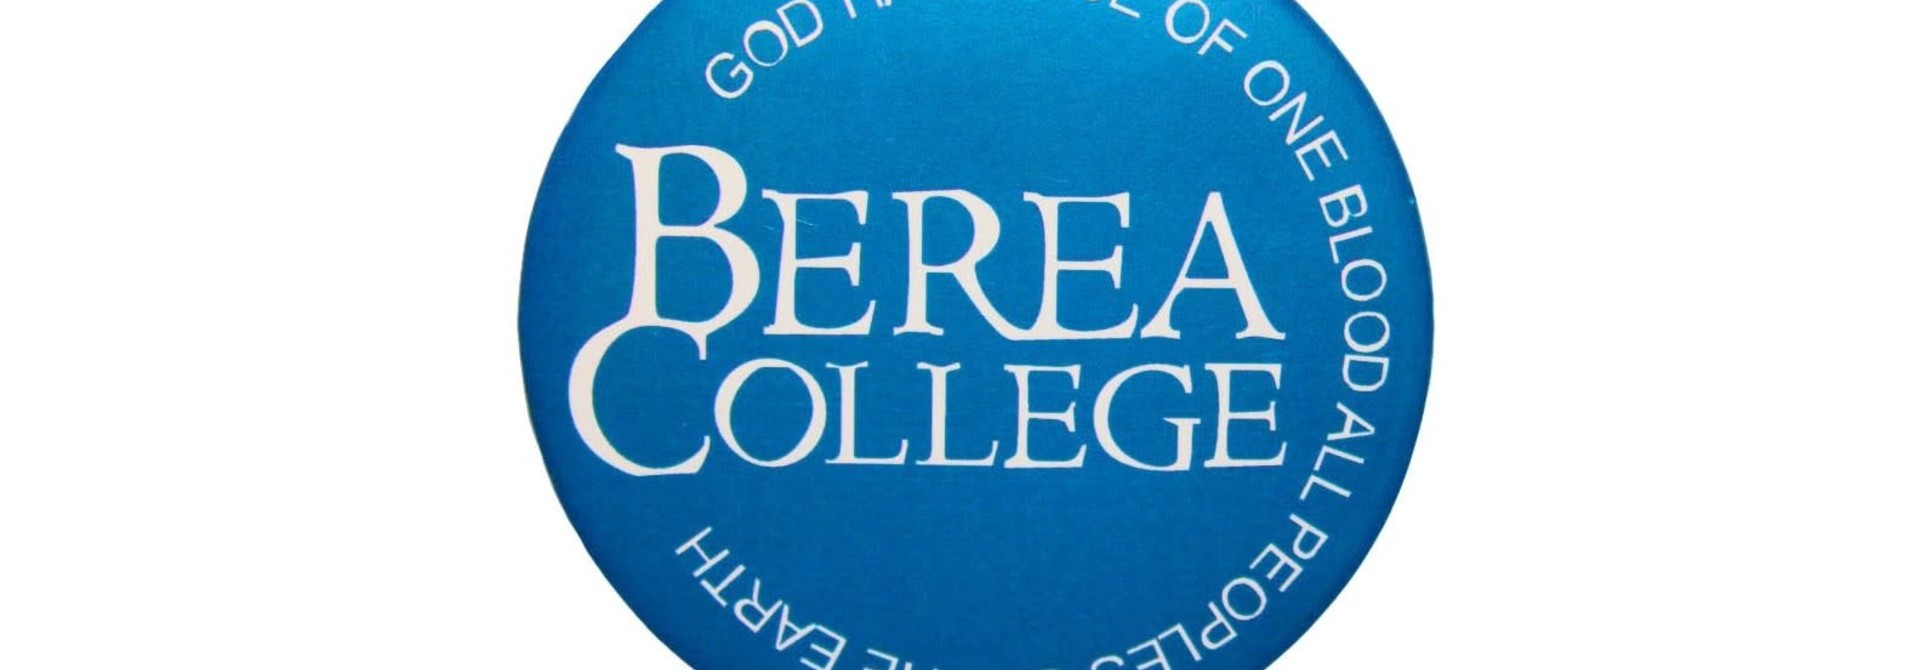 Berea College Blue Circle Logo Magnet